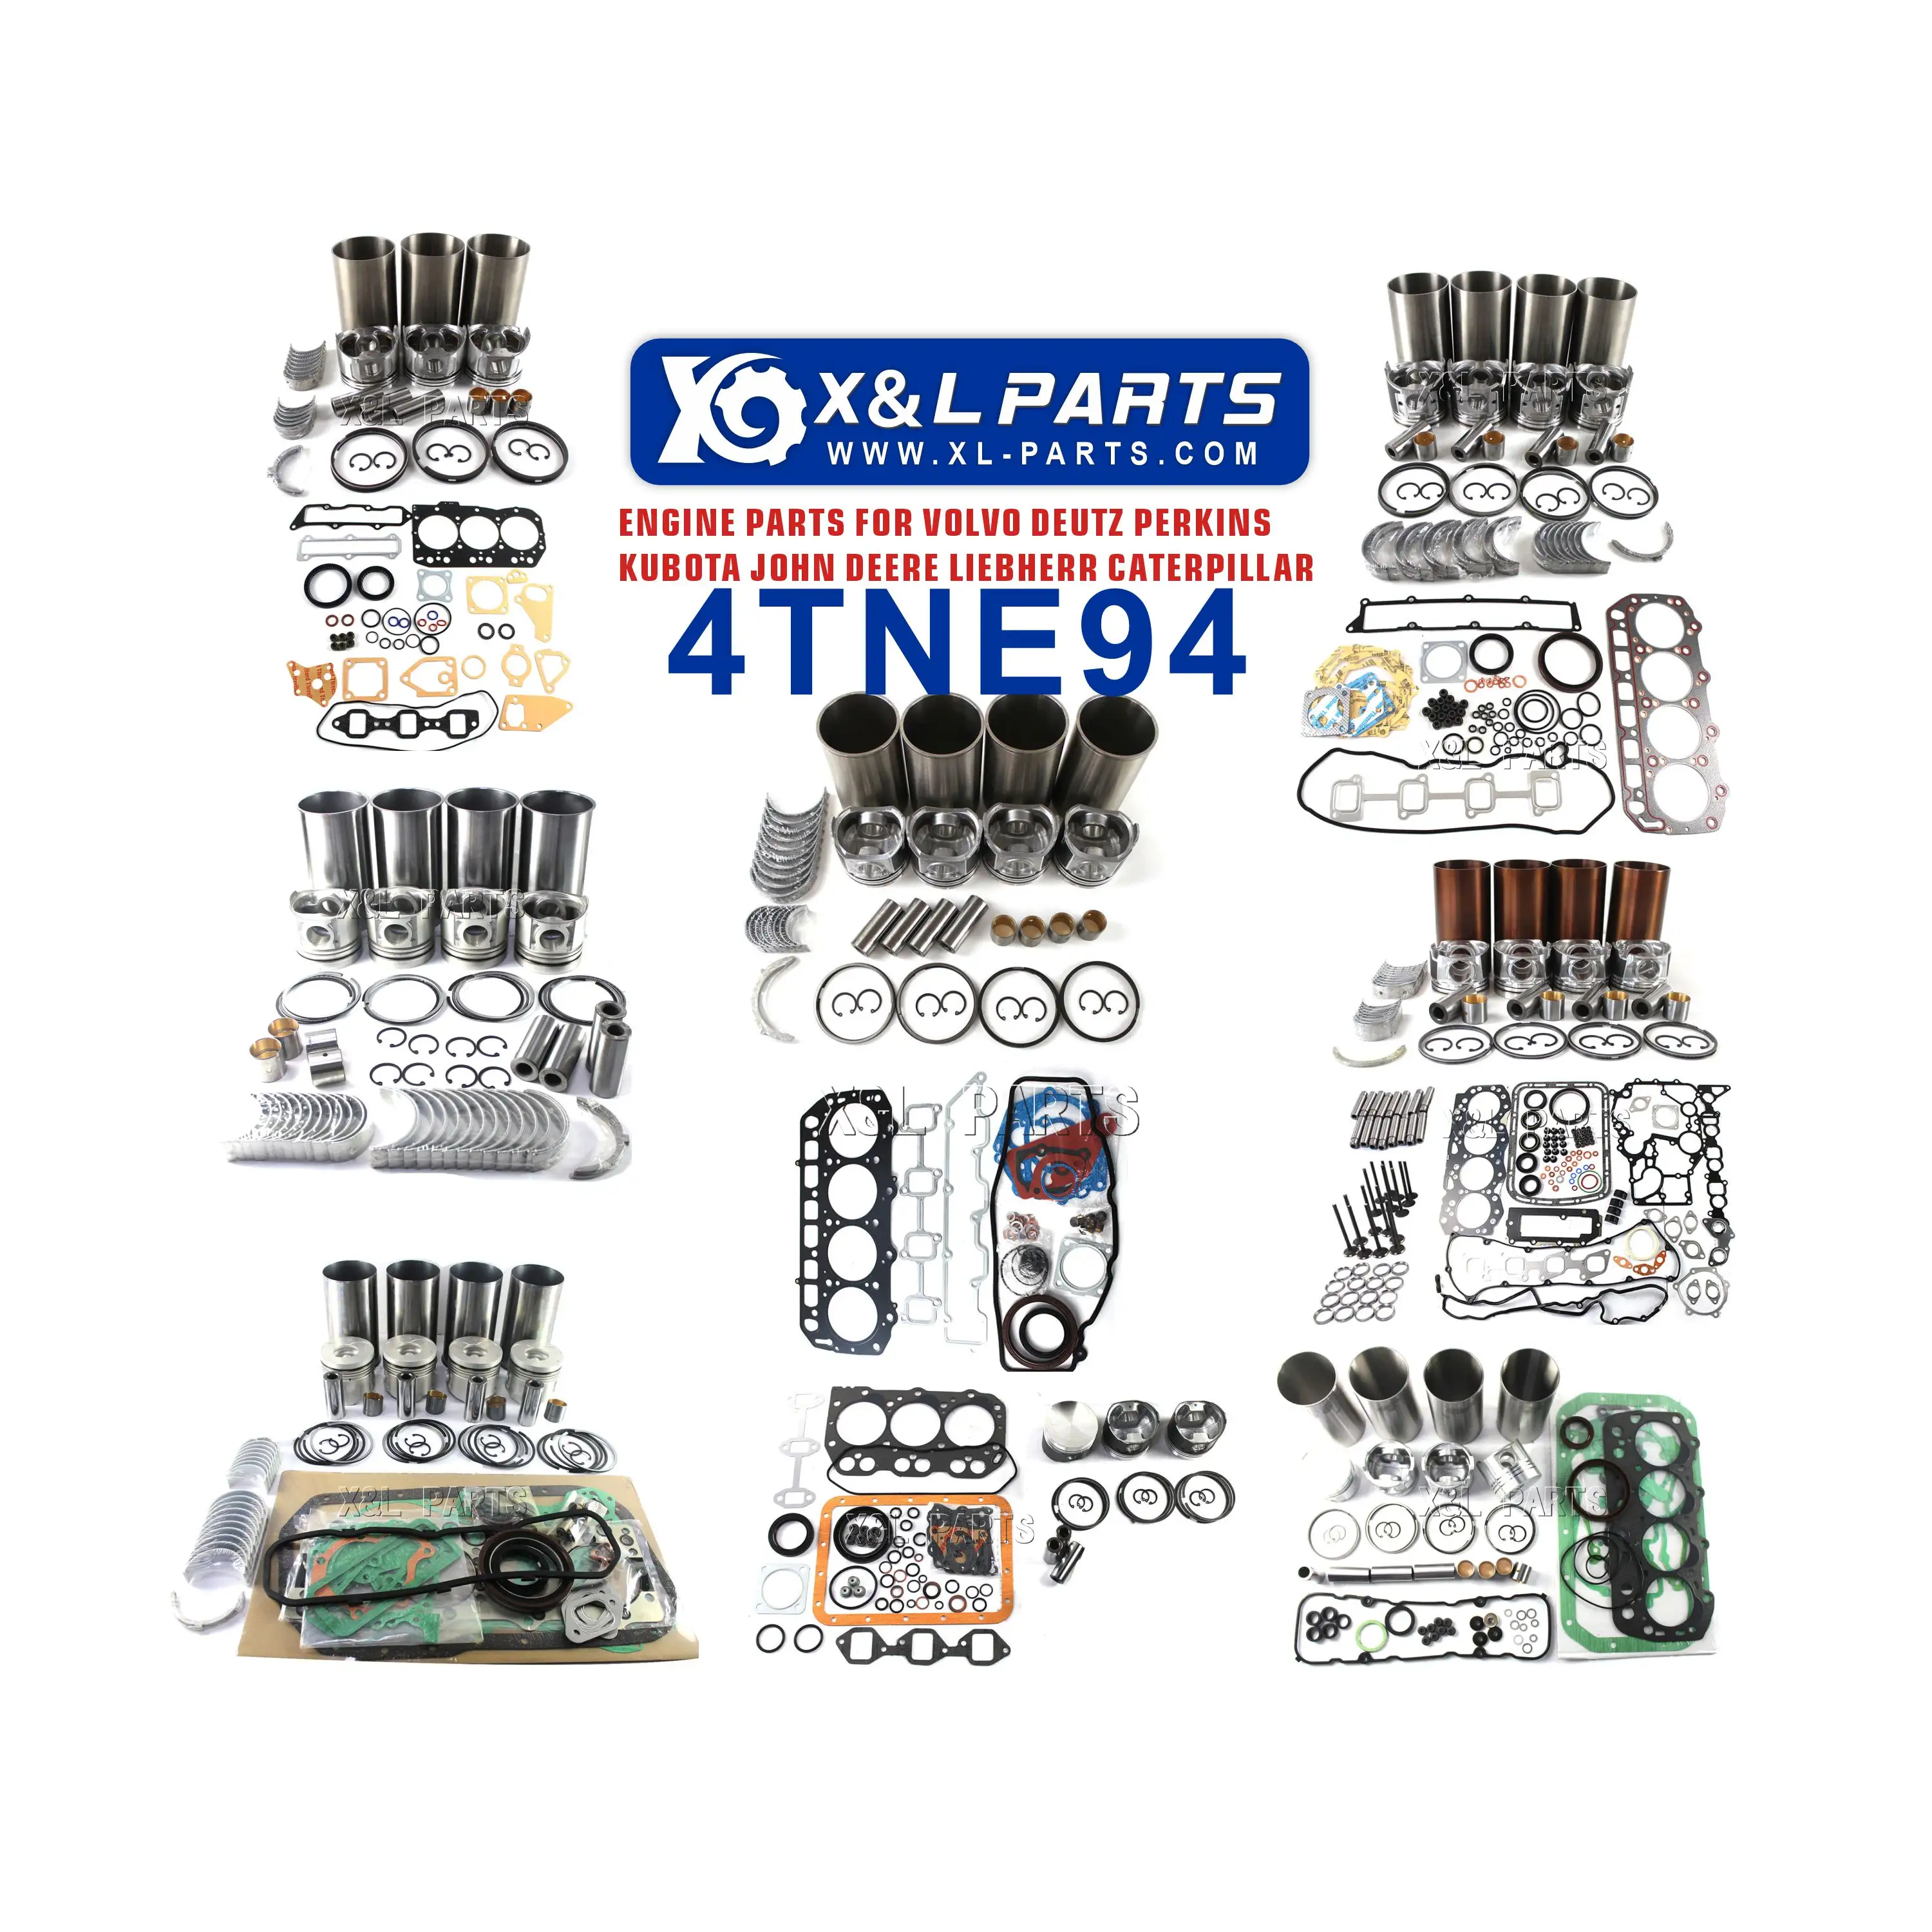 X&L 4TNE94 4D94E Engine Rebuild Kit 129900-22080 Liner For Yanmar Engine Overhaul Parts Kit for Komatsu Hyster Forklift Truck